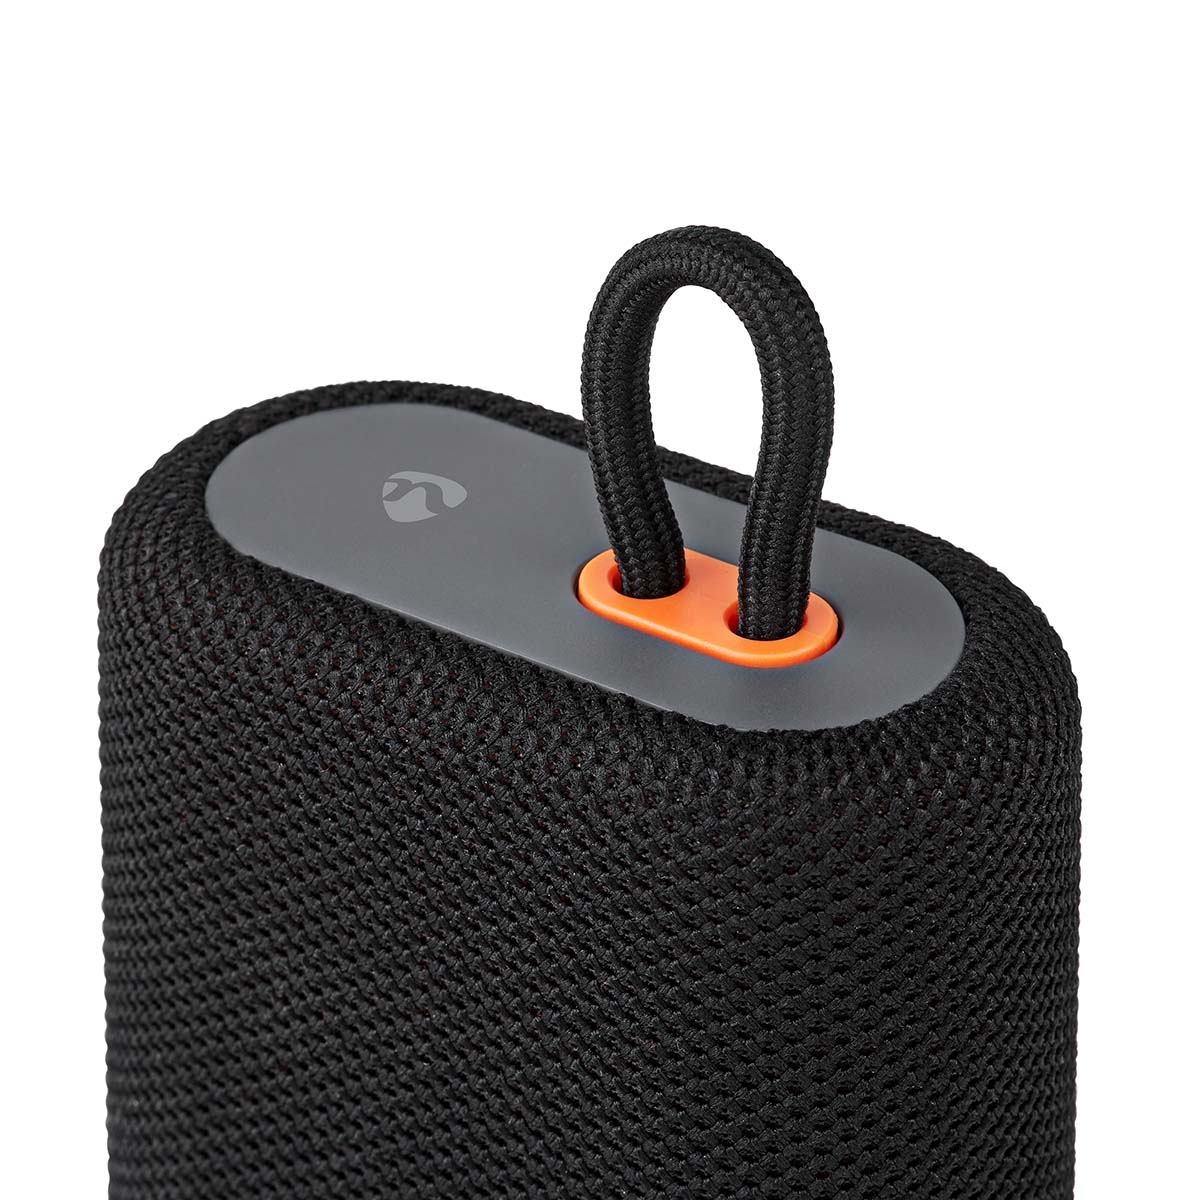 Nedis Bluetooth Speaker 15W